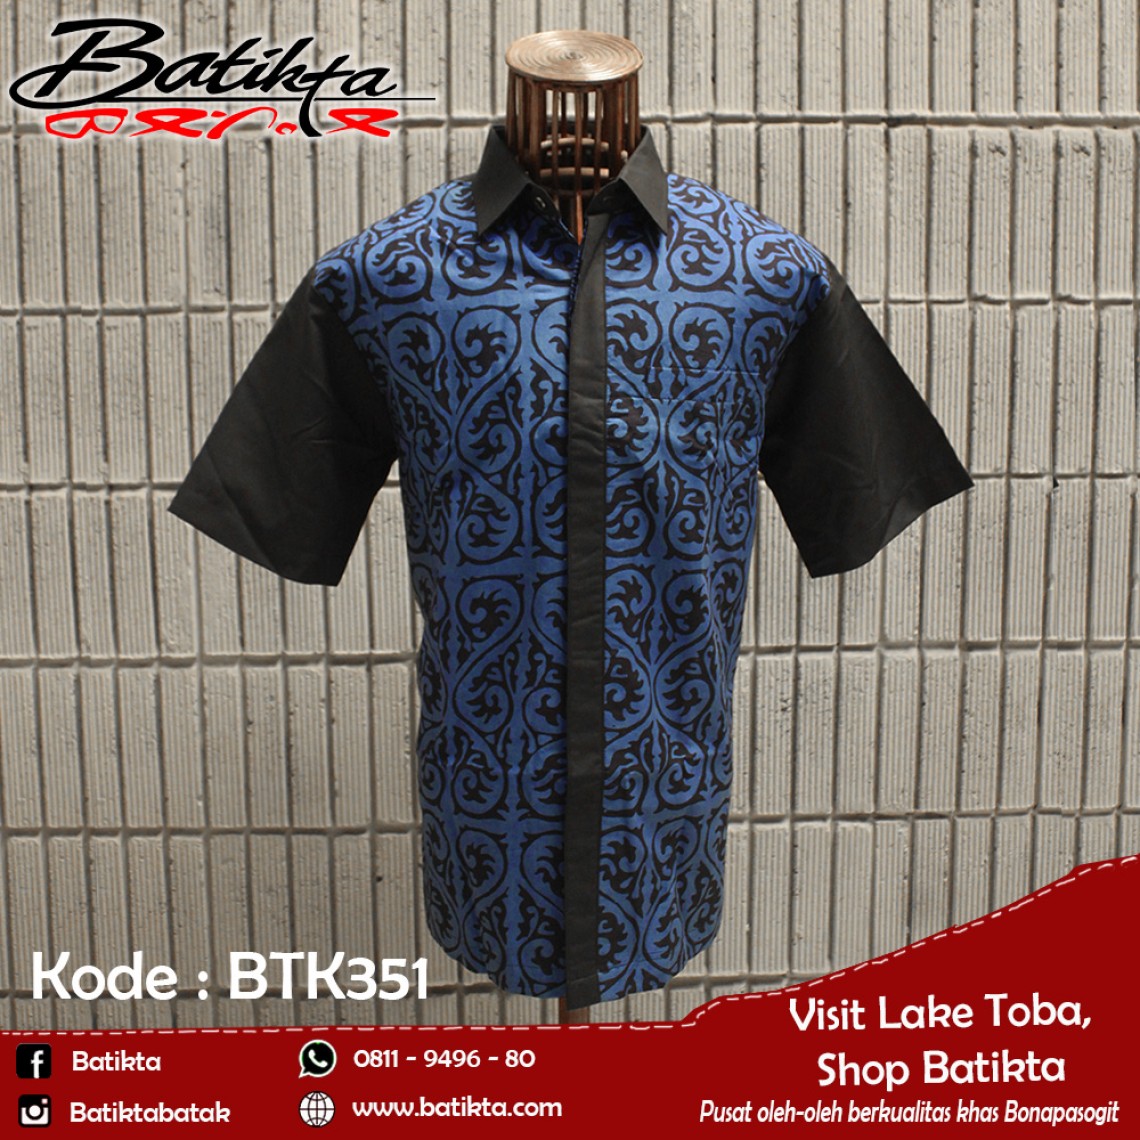 BTK351 HEM Batik Motif Gorga Warna Biru Hitam profile picture